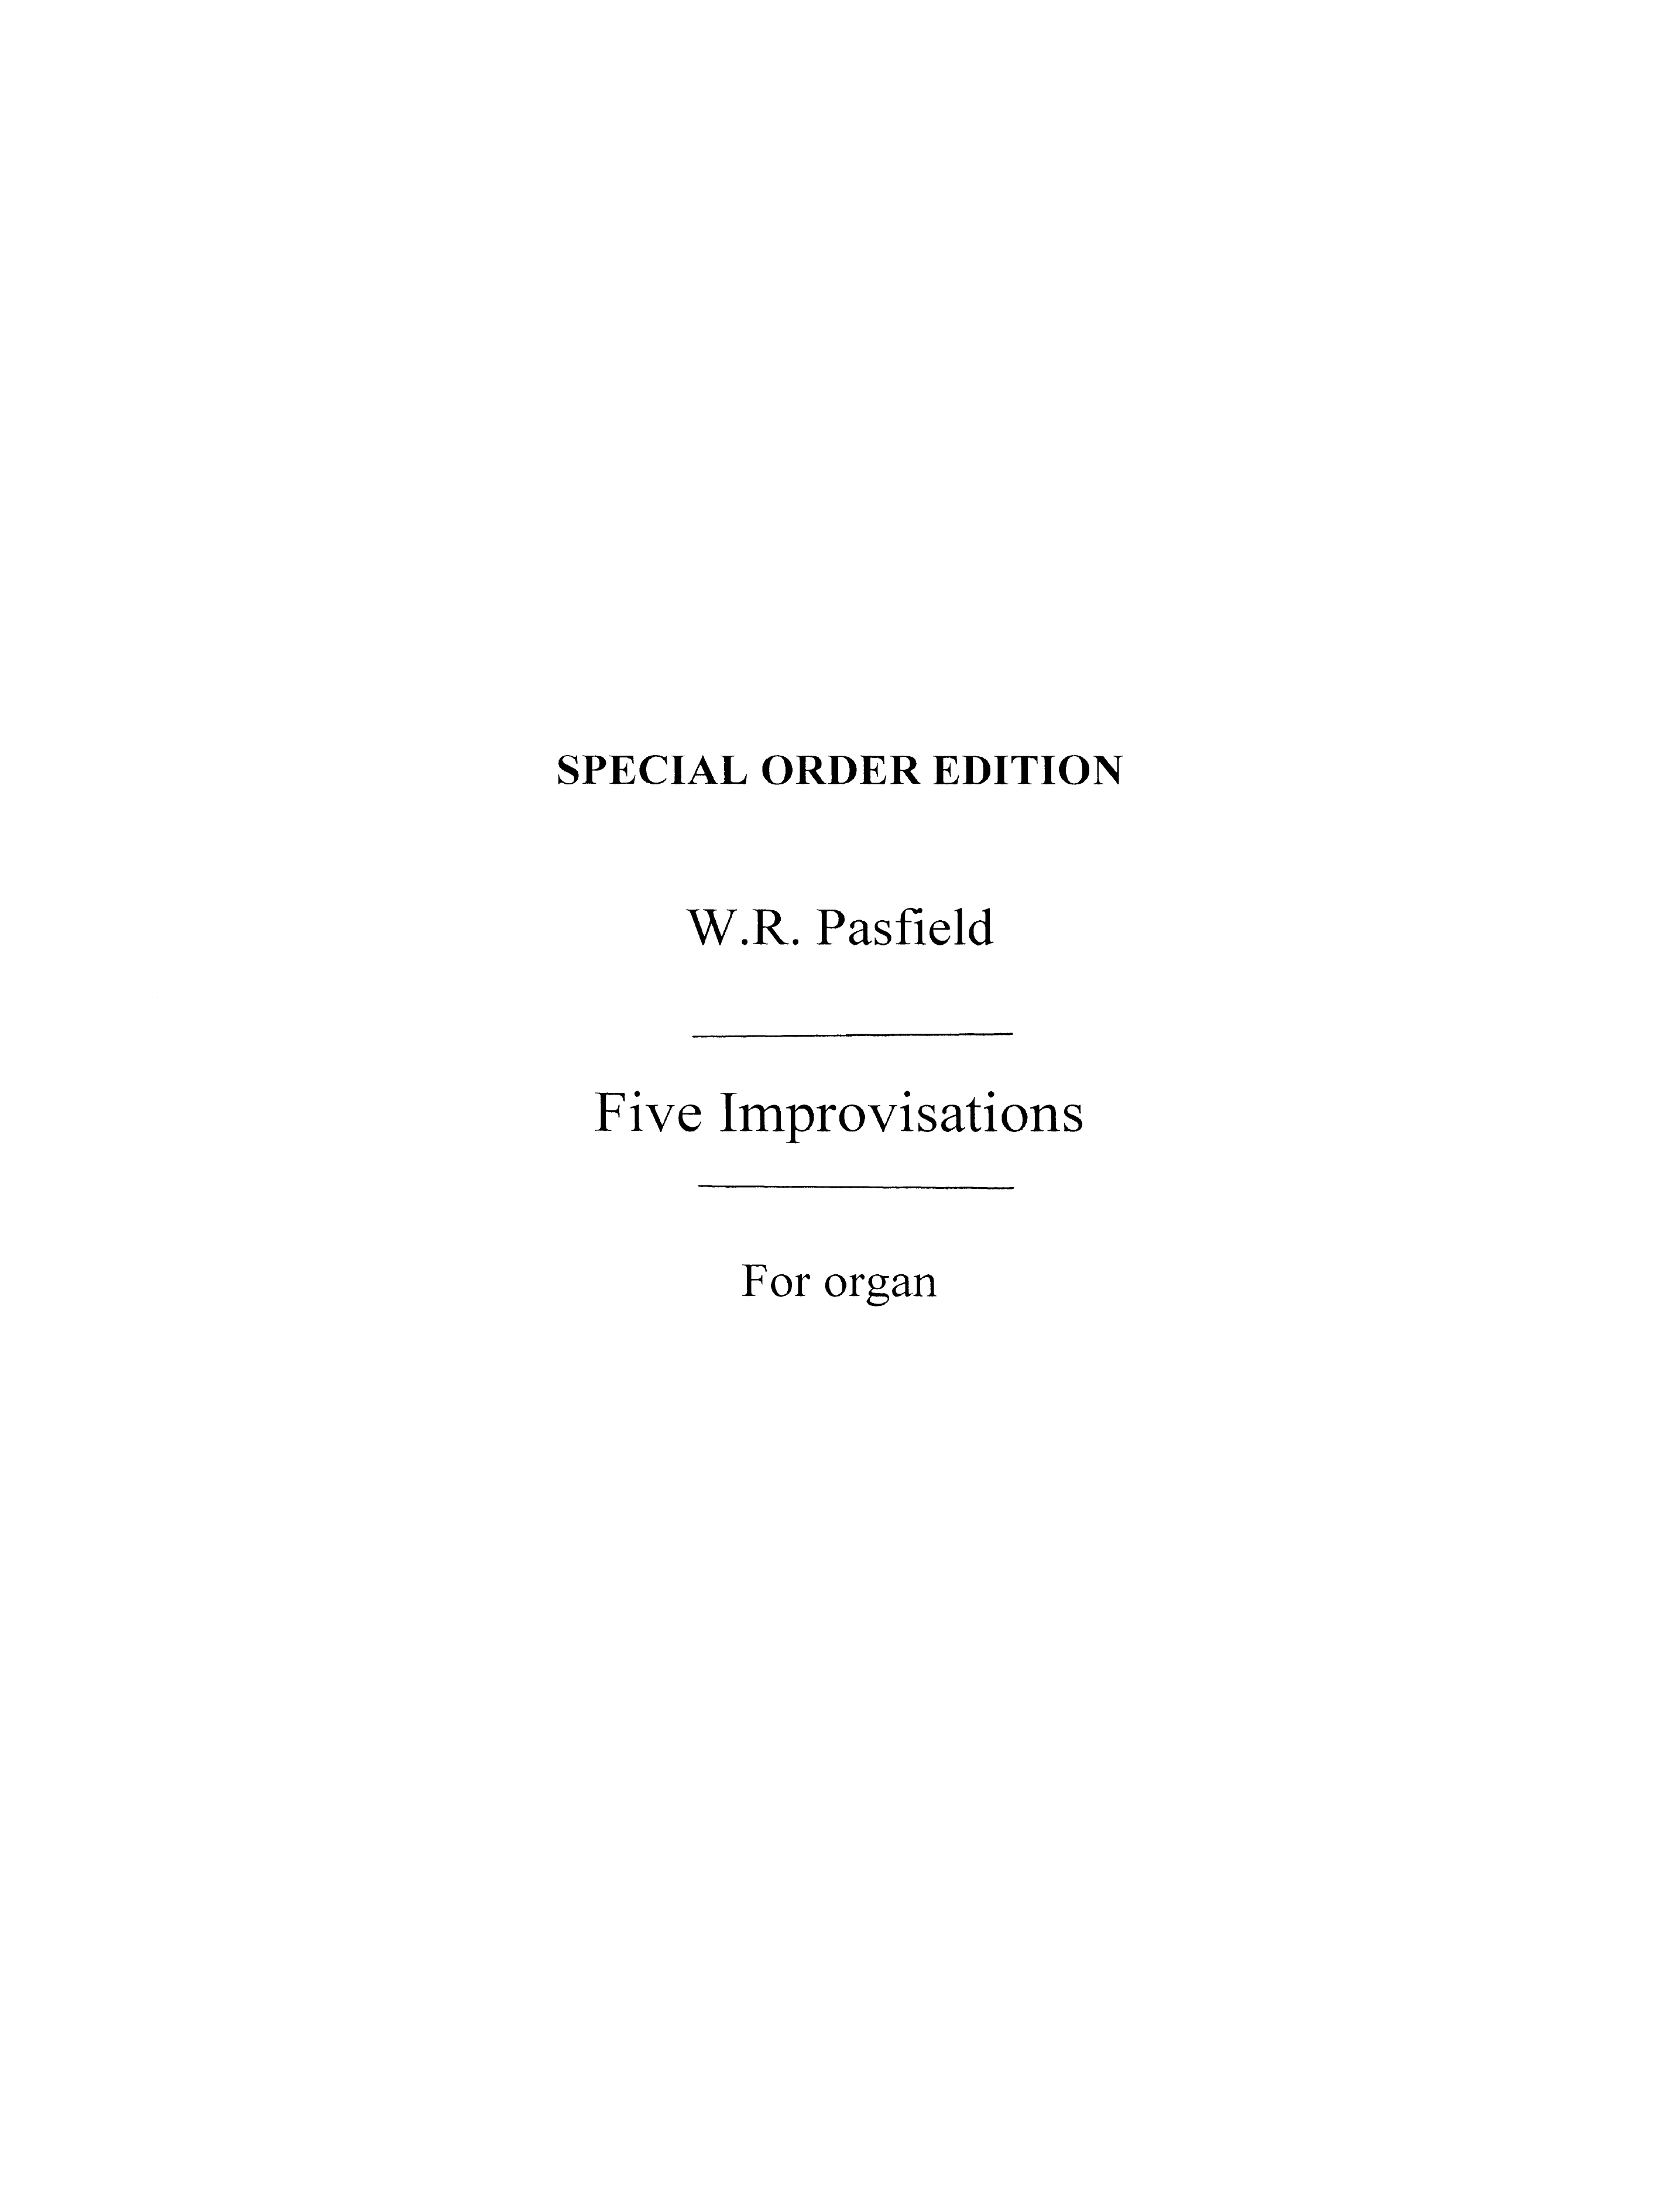 William Pasfield: Five Improvisations For Organ